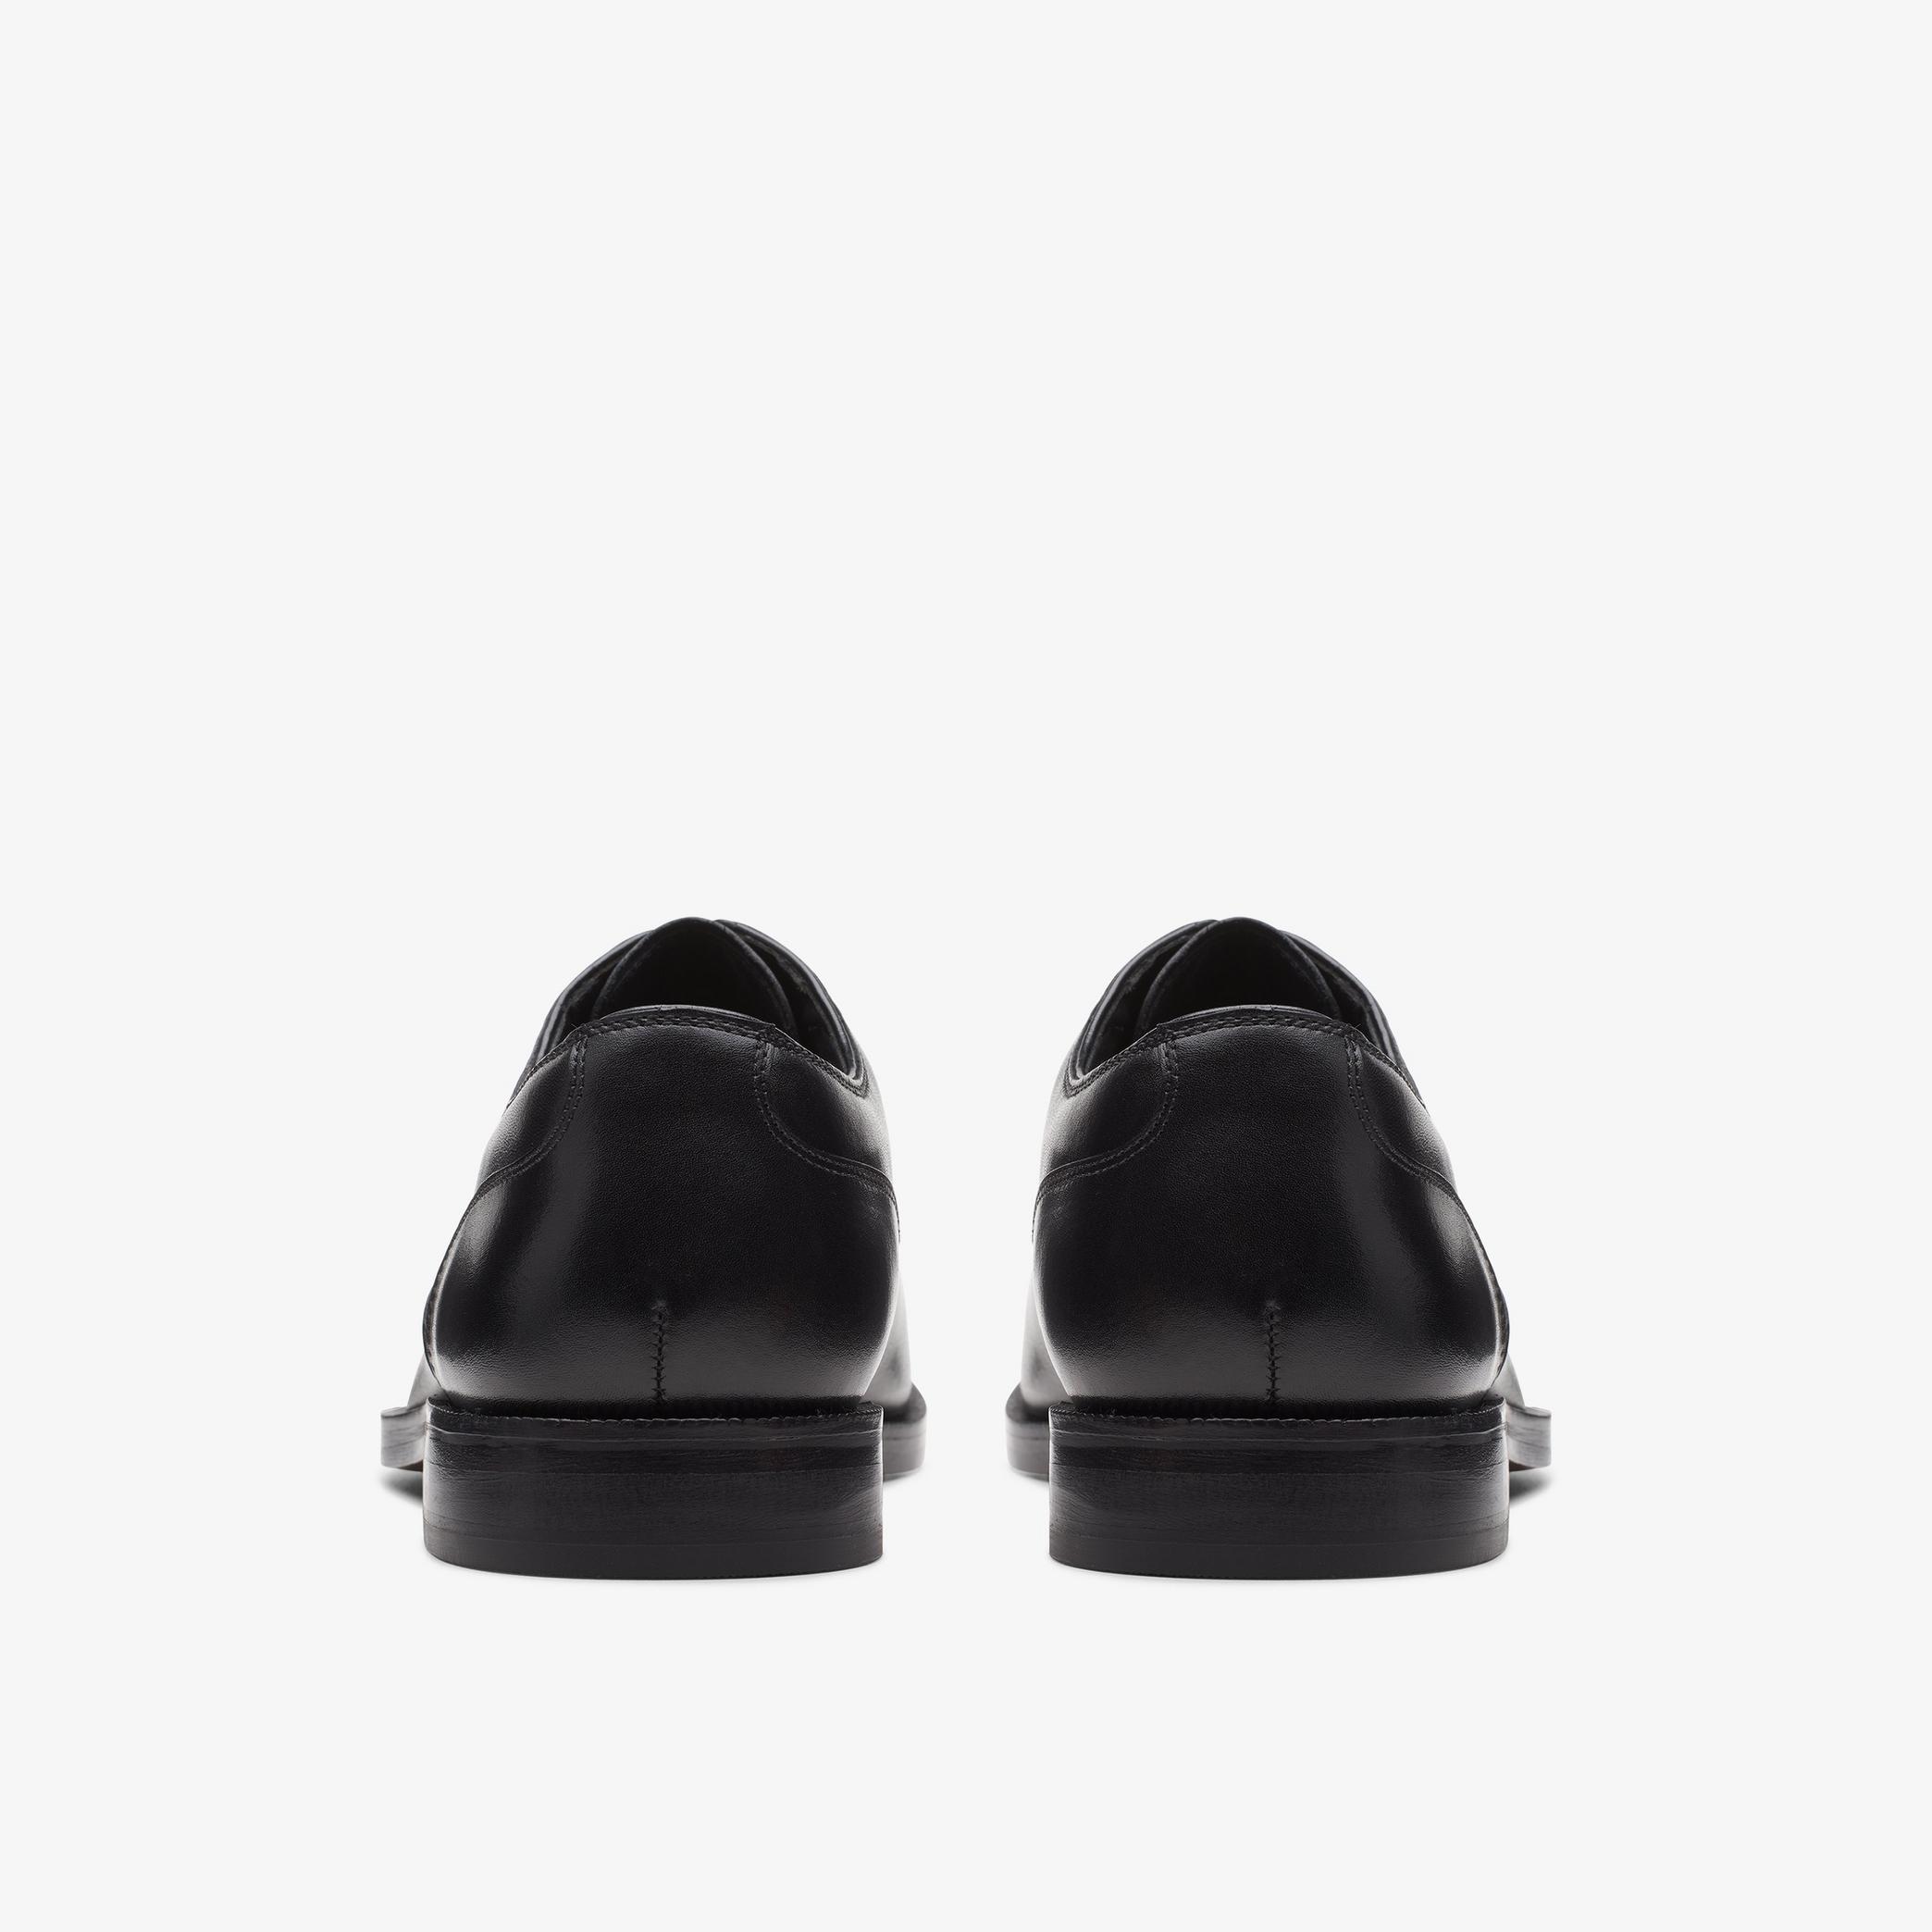 Mens Craftdean Cap Black Leather Shoes | Clarks UK